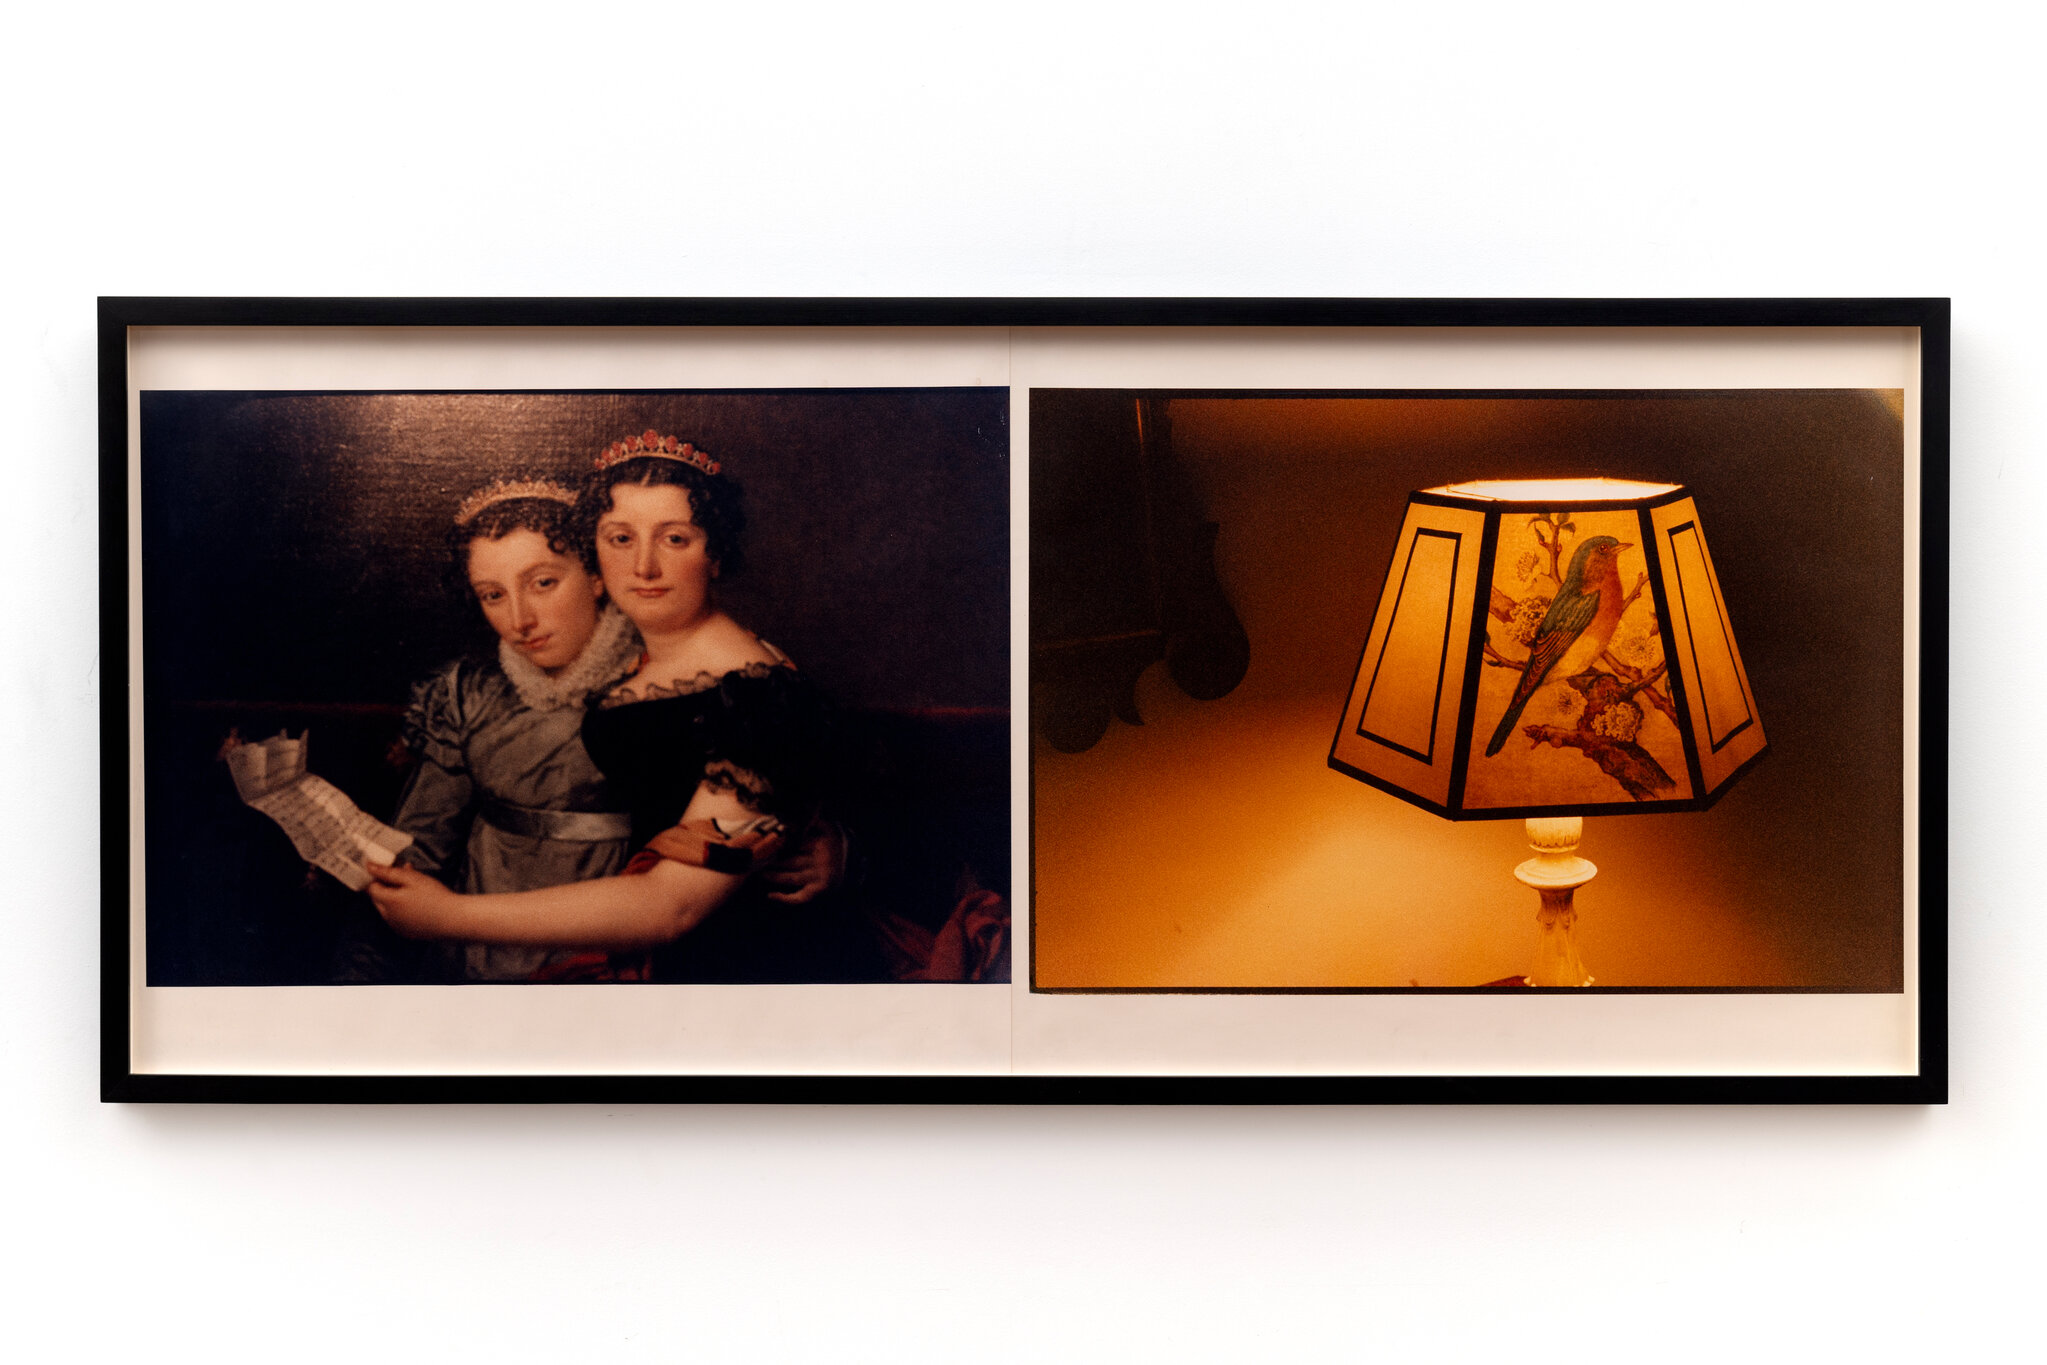 Susan Brockman, The Bonaparte Sisters reading by a bird lamp, 1992